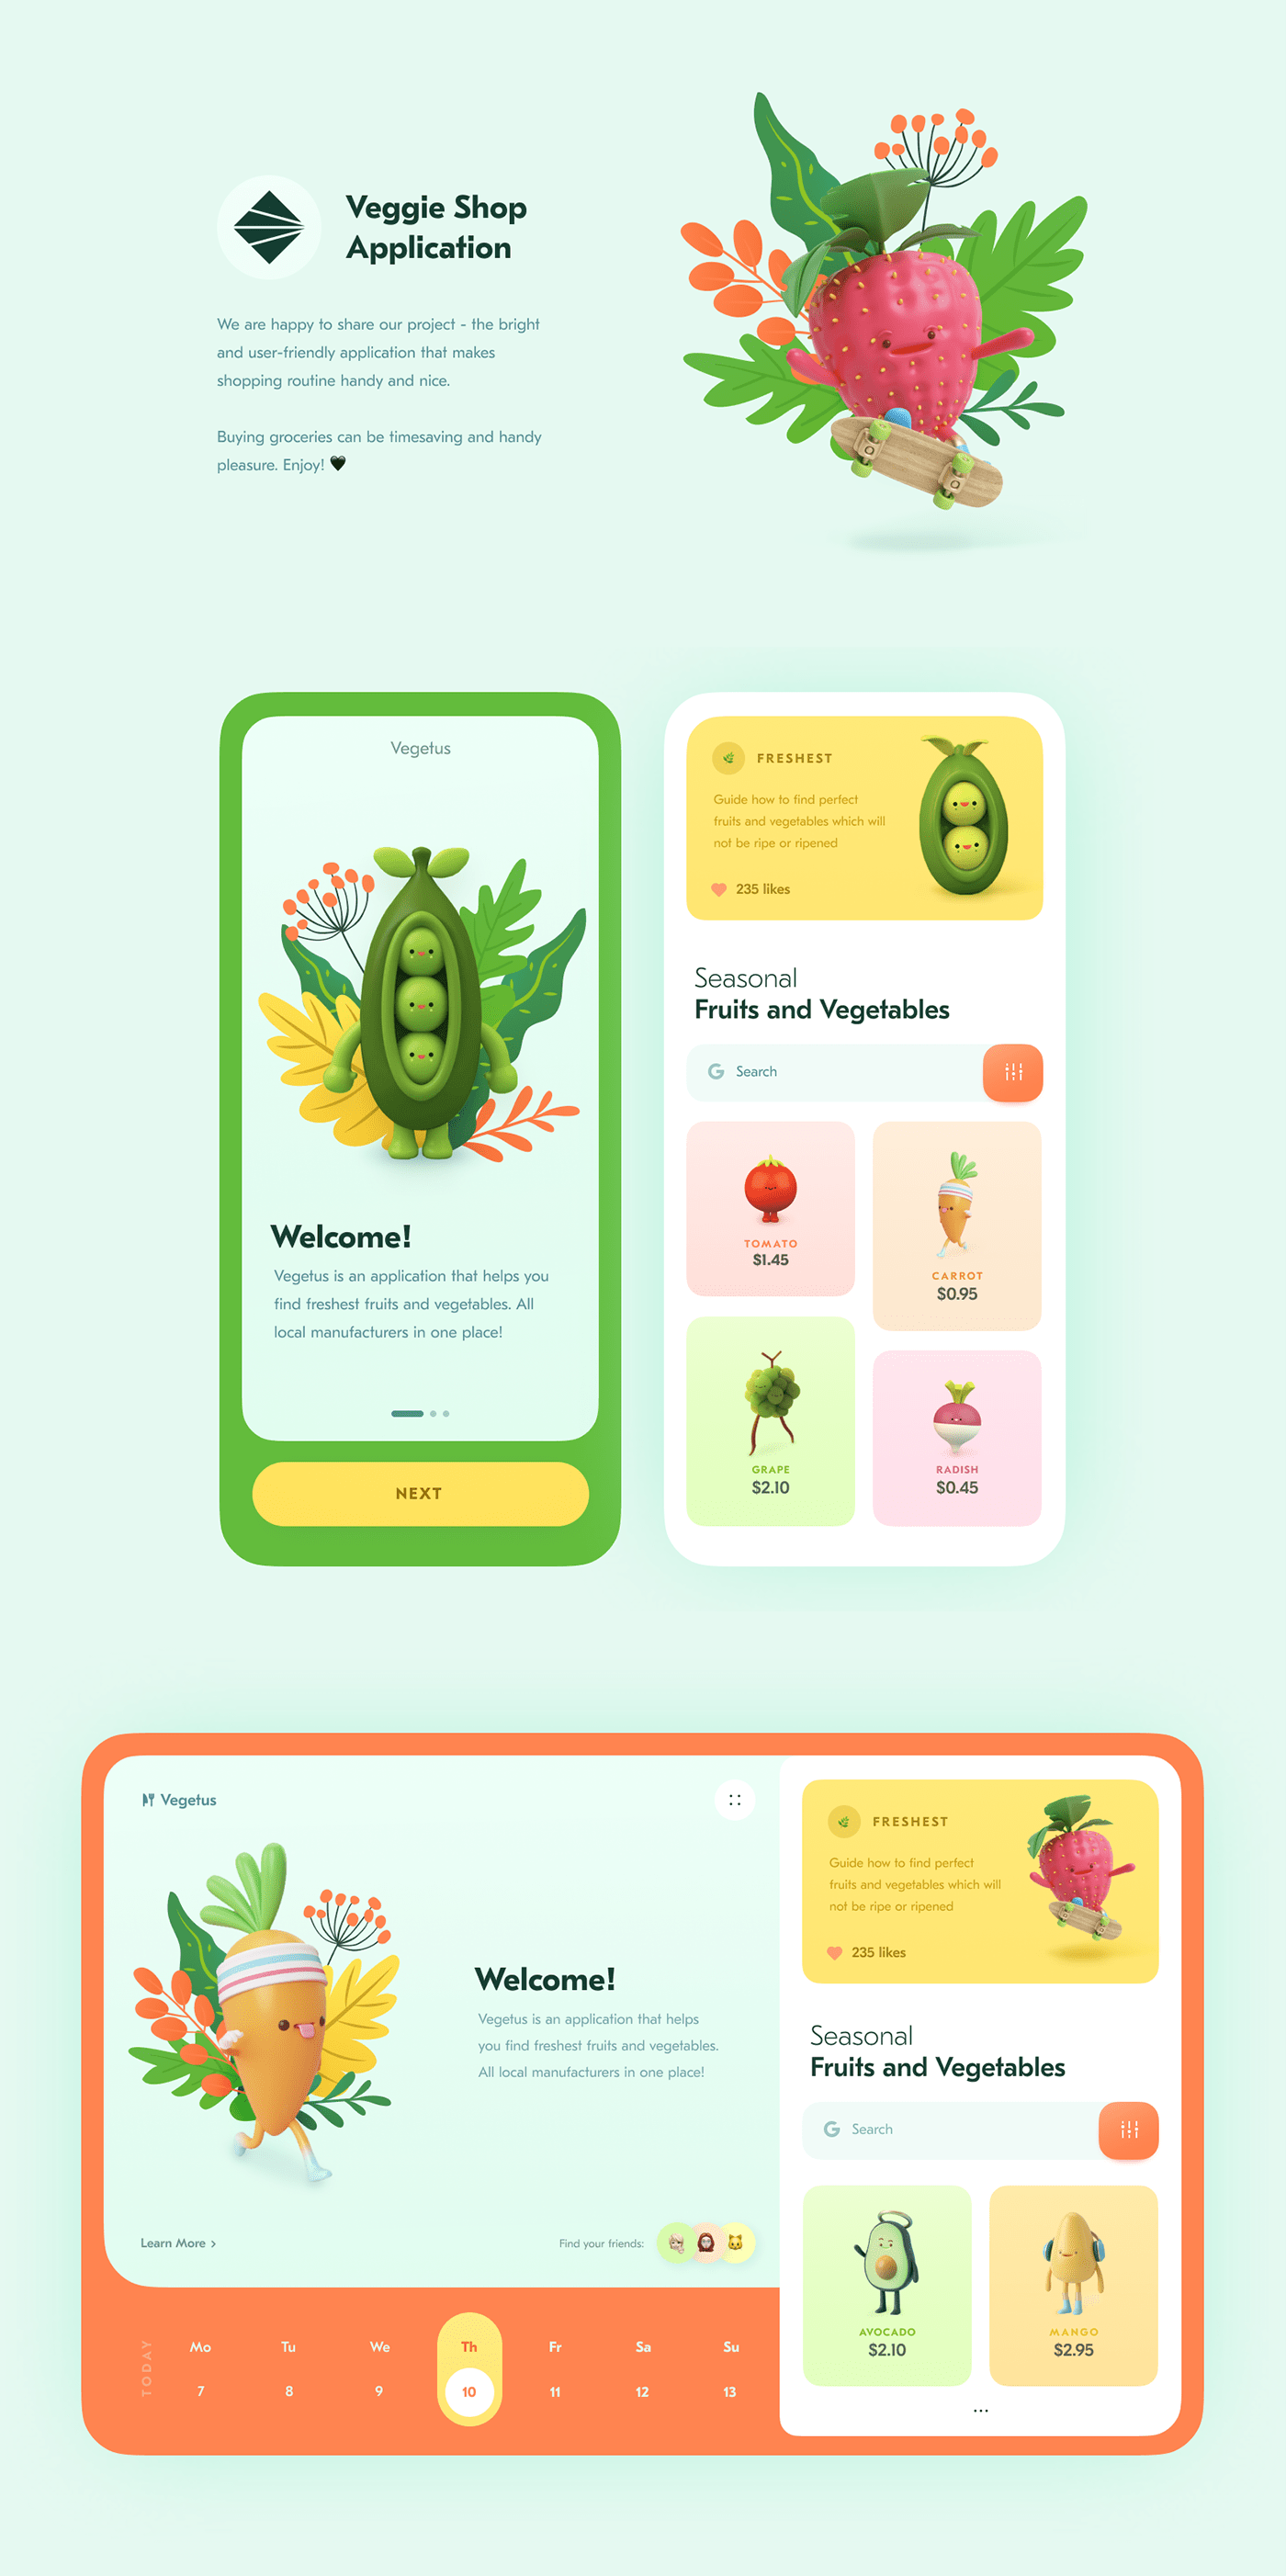 Mobile app inspiration example #270: Veggie Shop App